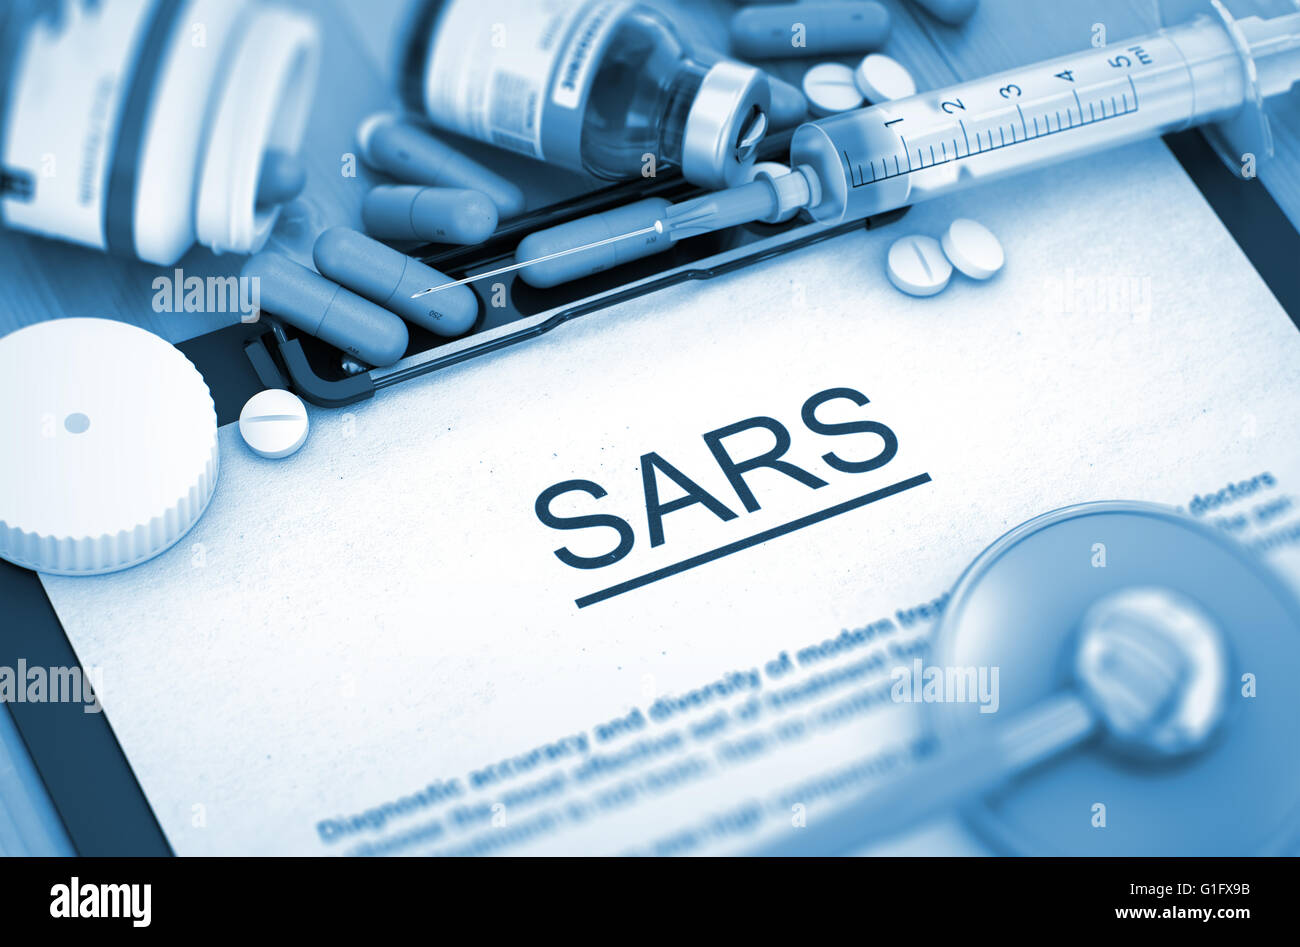 La SARS. Concetto medico. Foto Stock